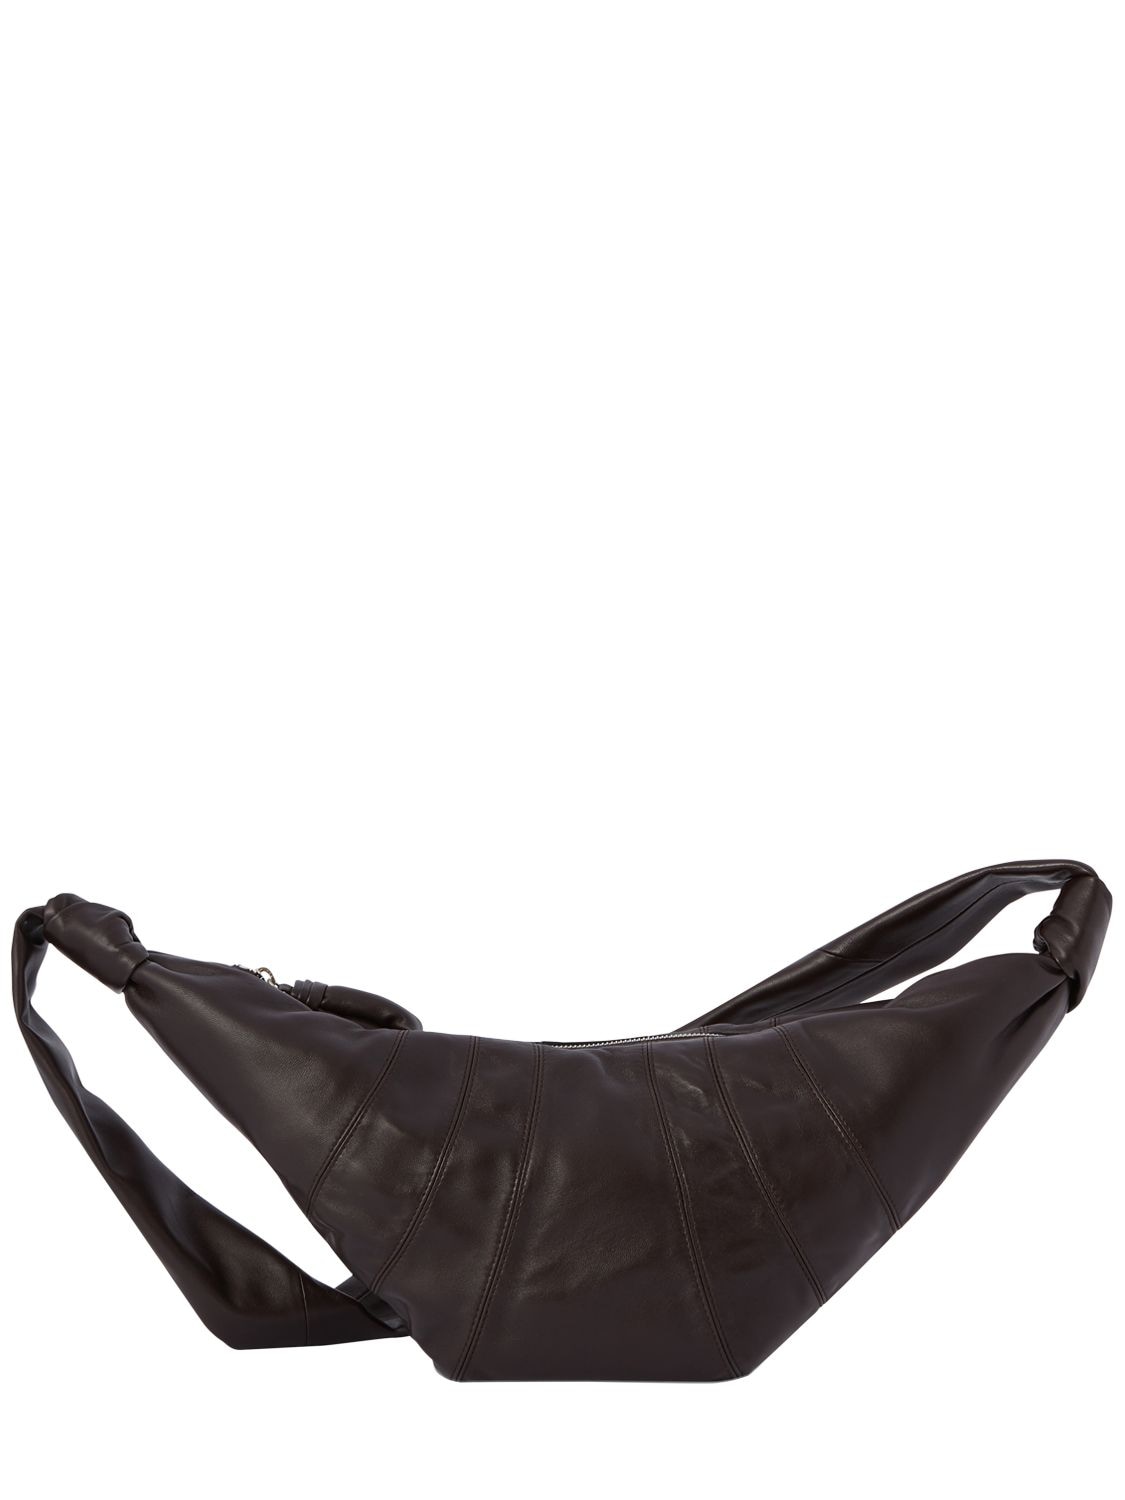 Lemaire Medium Croissant Leather Shoulder Bag In Dark Brown